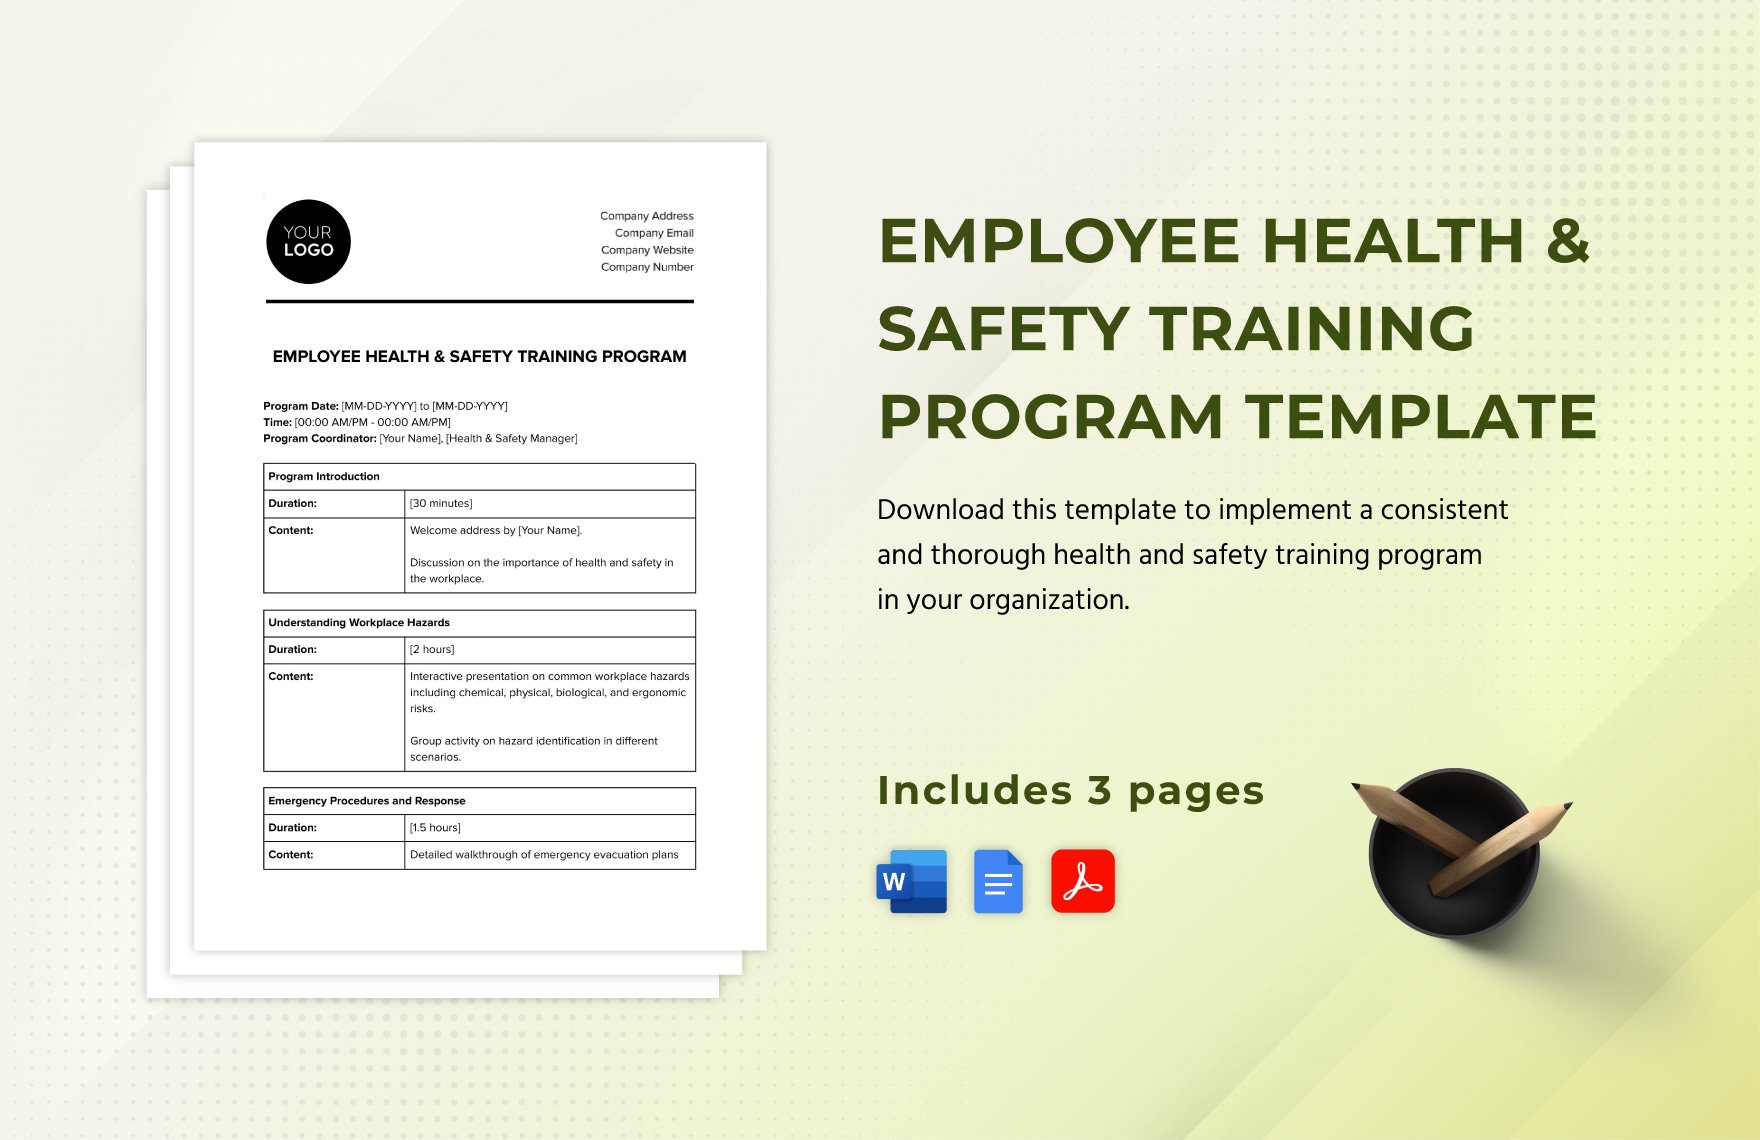 Employee Health & Safety Training Program Template